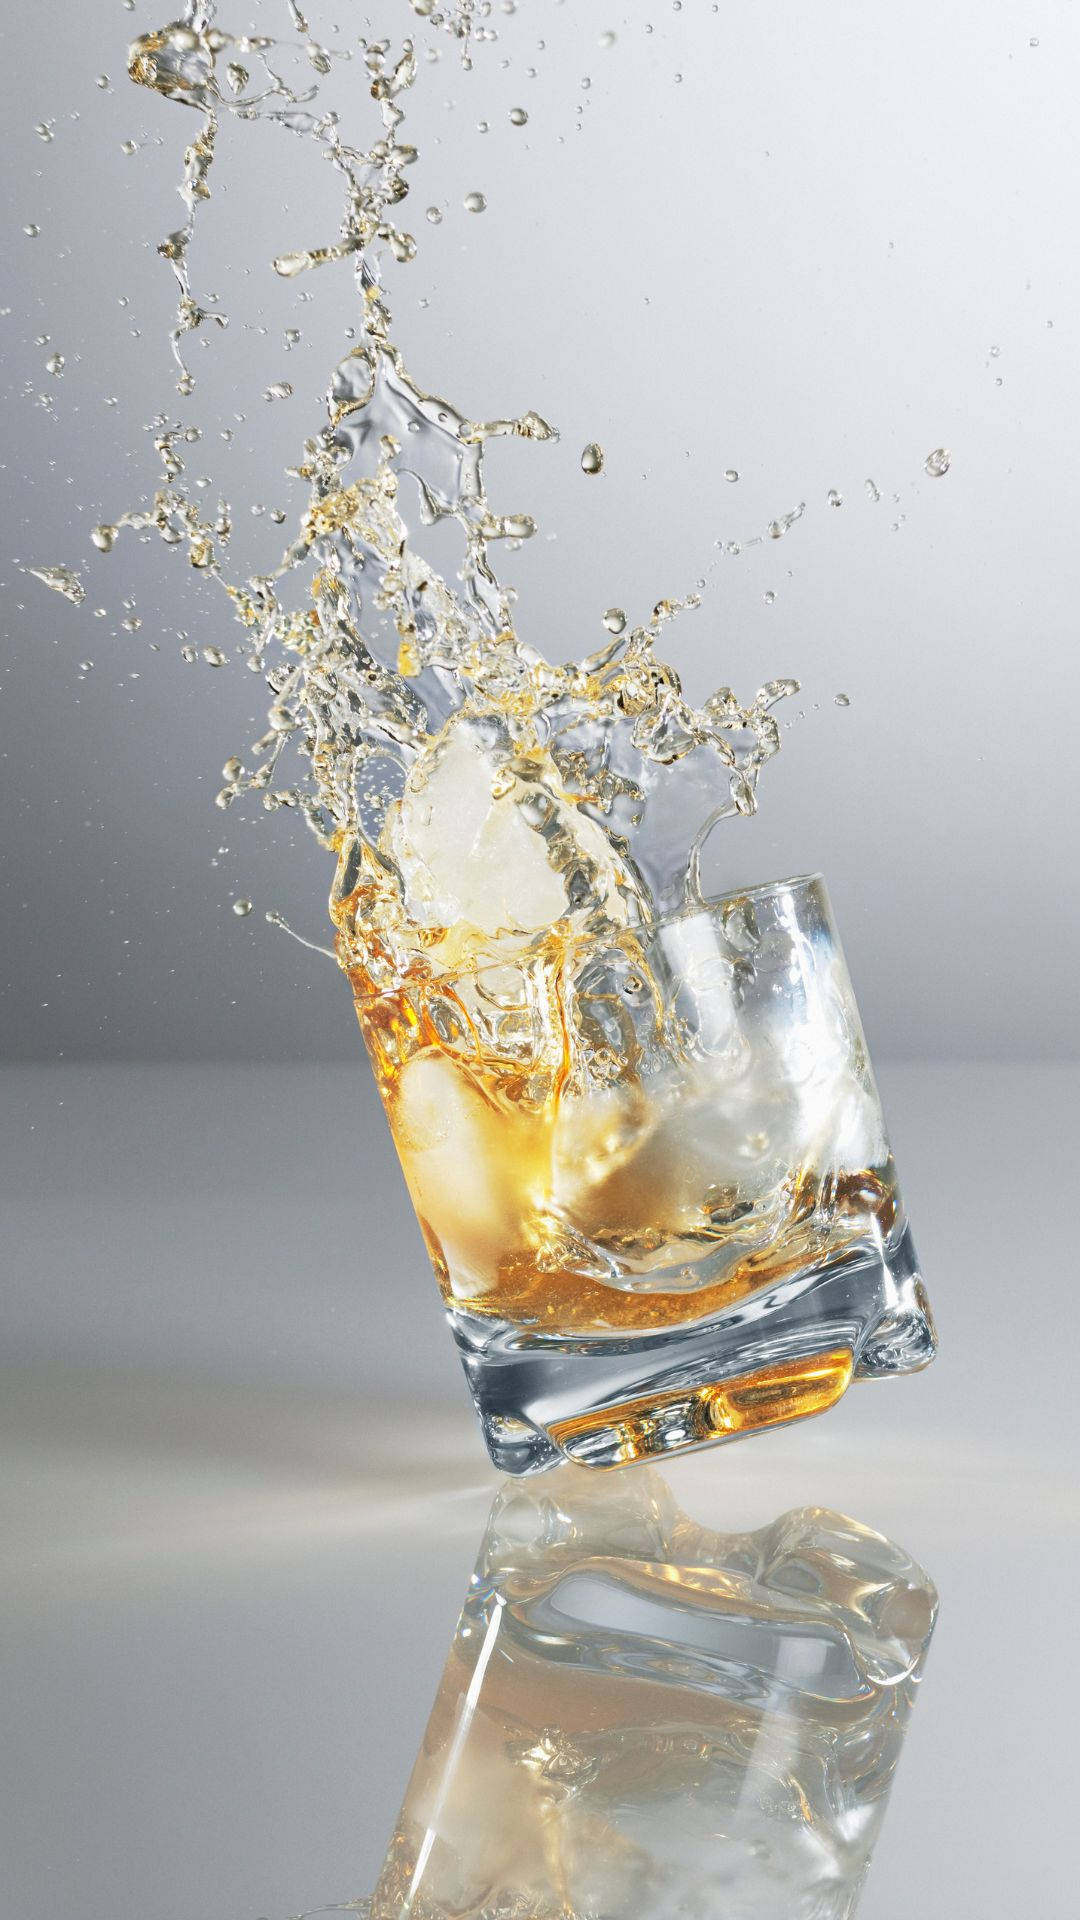 Splash Of Alcohol In Shot Glass Wallpaper